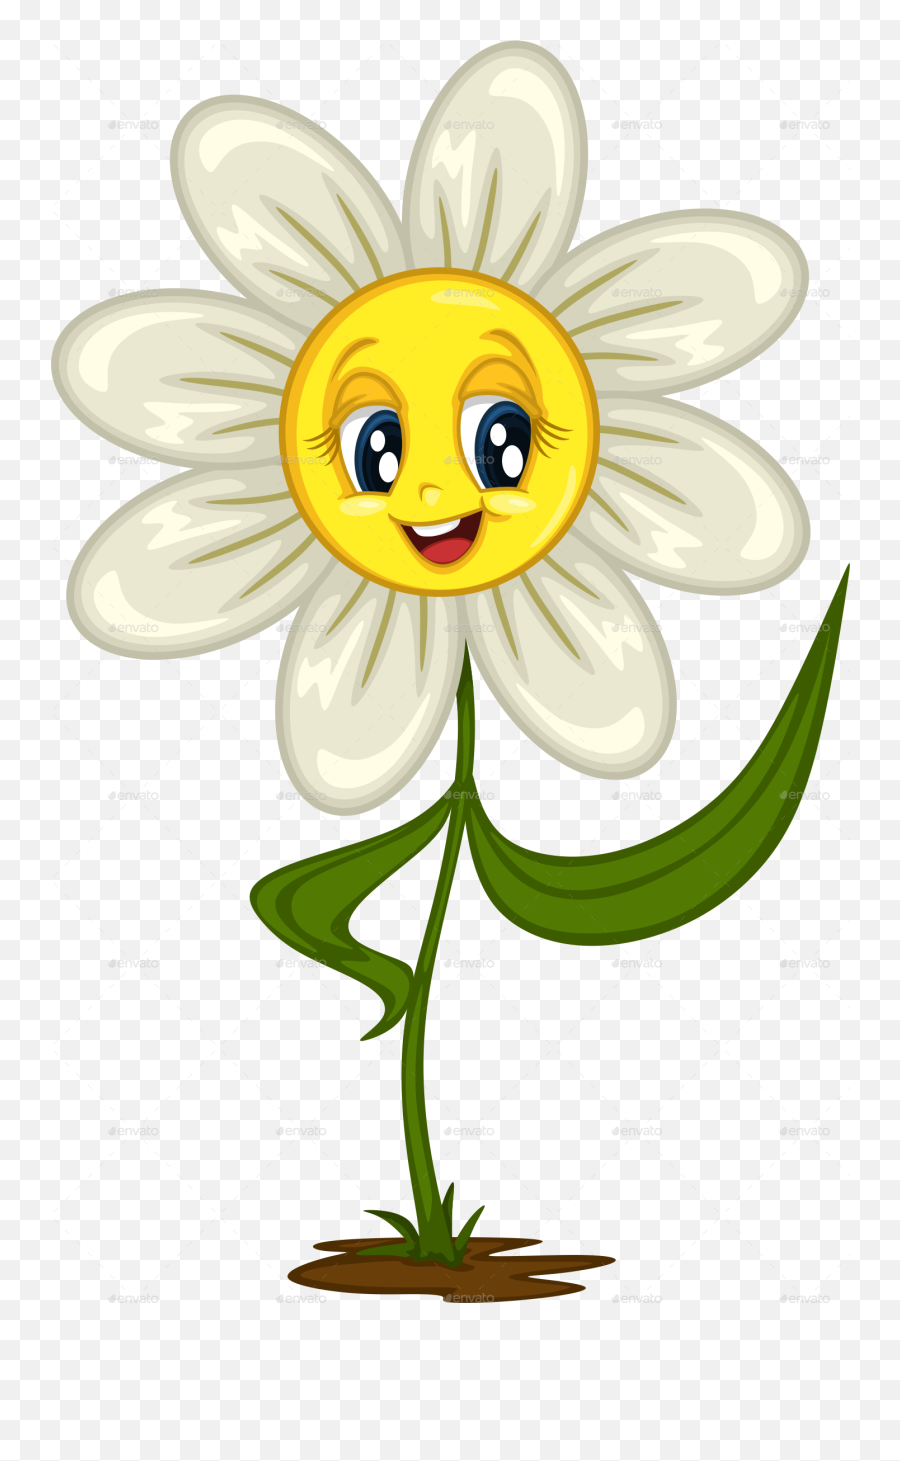 Waving Daisy Waving Smiley Face Flower - Daisy Flower Cartoon Emoji,Waving Emoticon